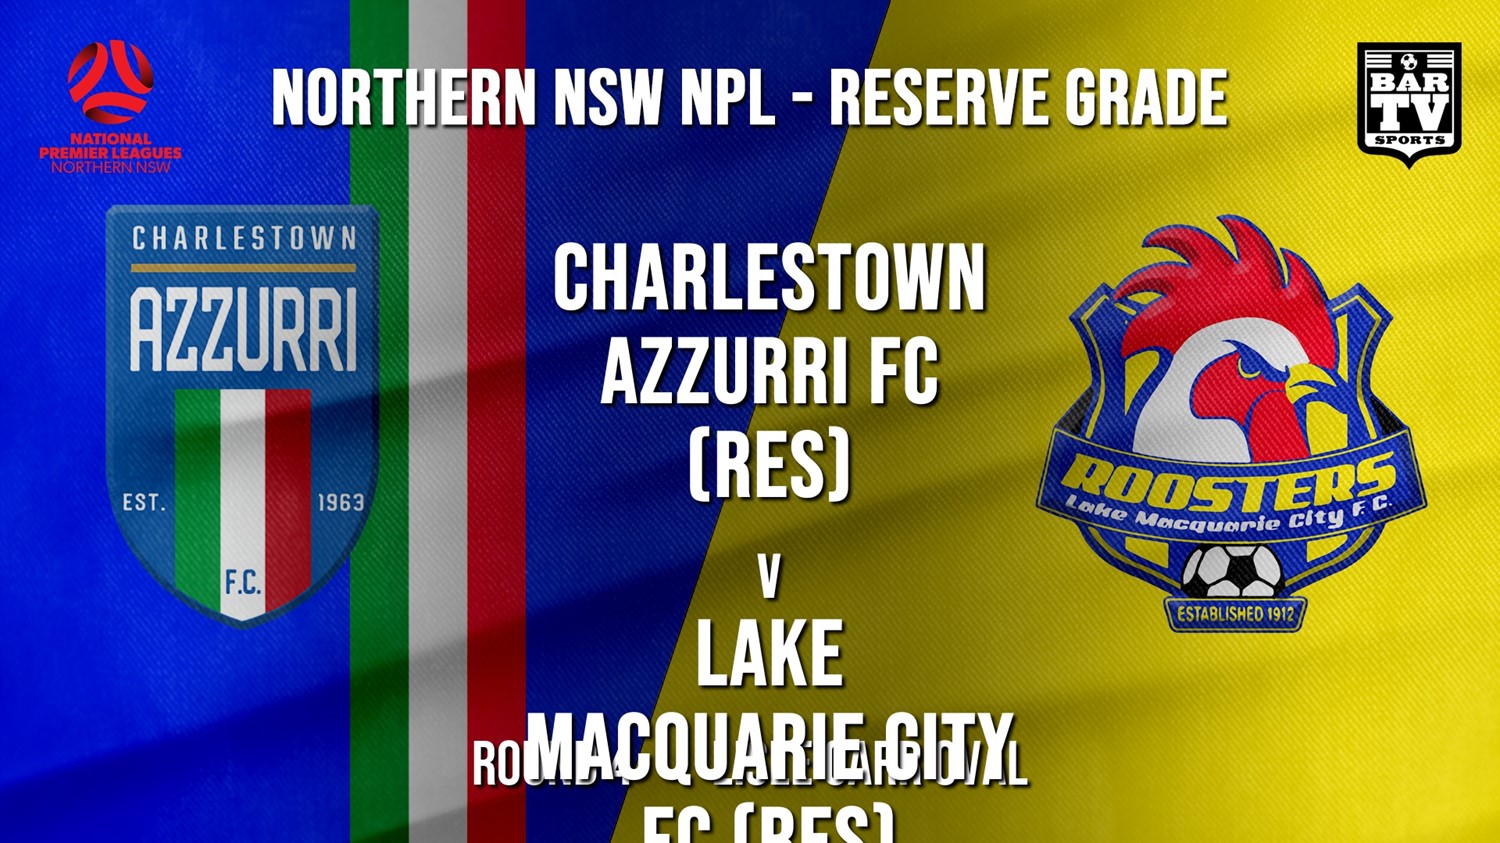 NPL NNSW RES Round 4 - Charlestown Azzurri FC (Res) v Lake Macquarie City FC (Res) Minigame Slate Image